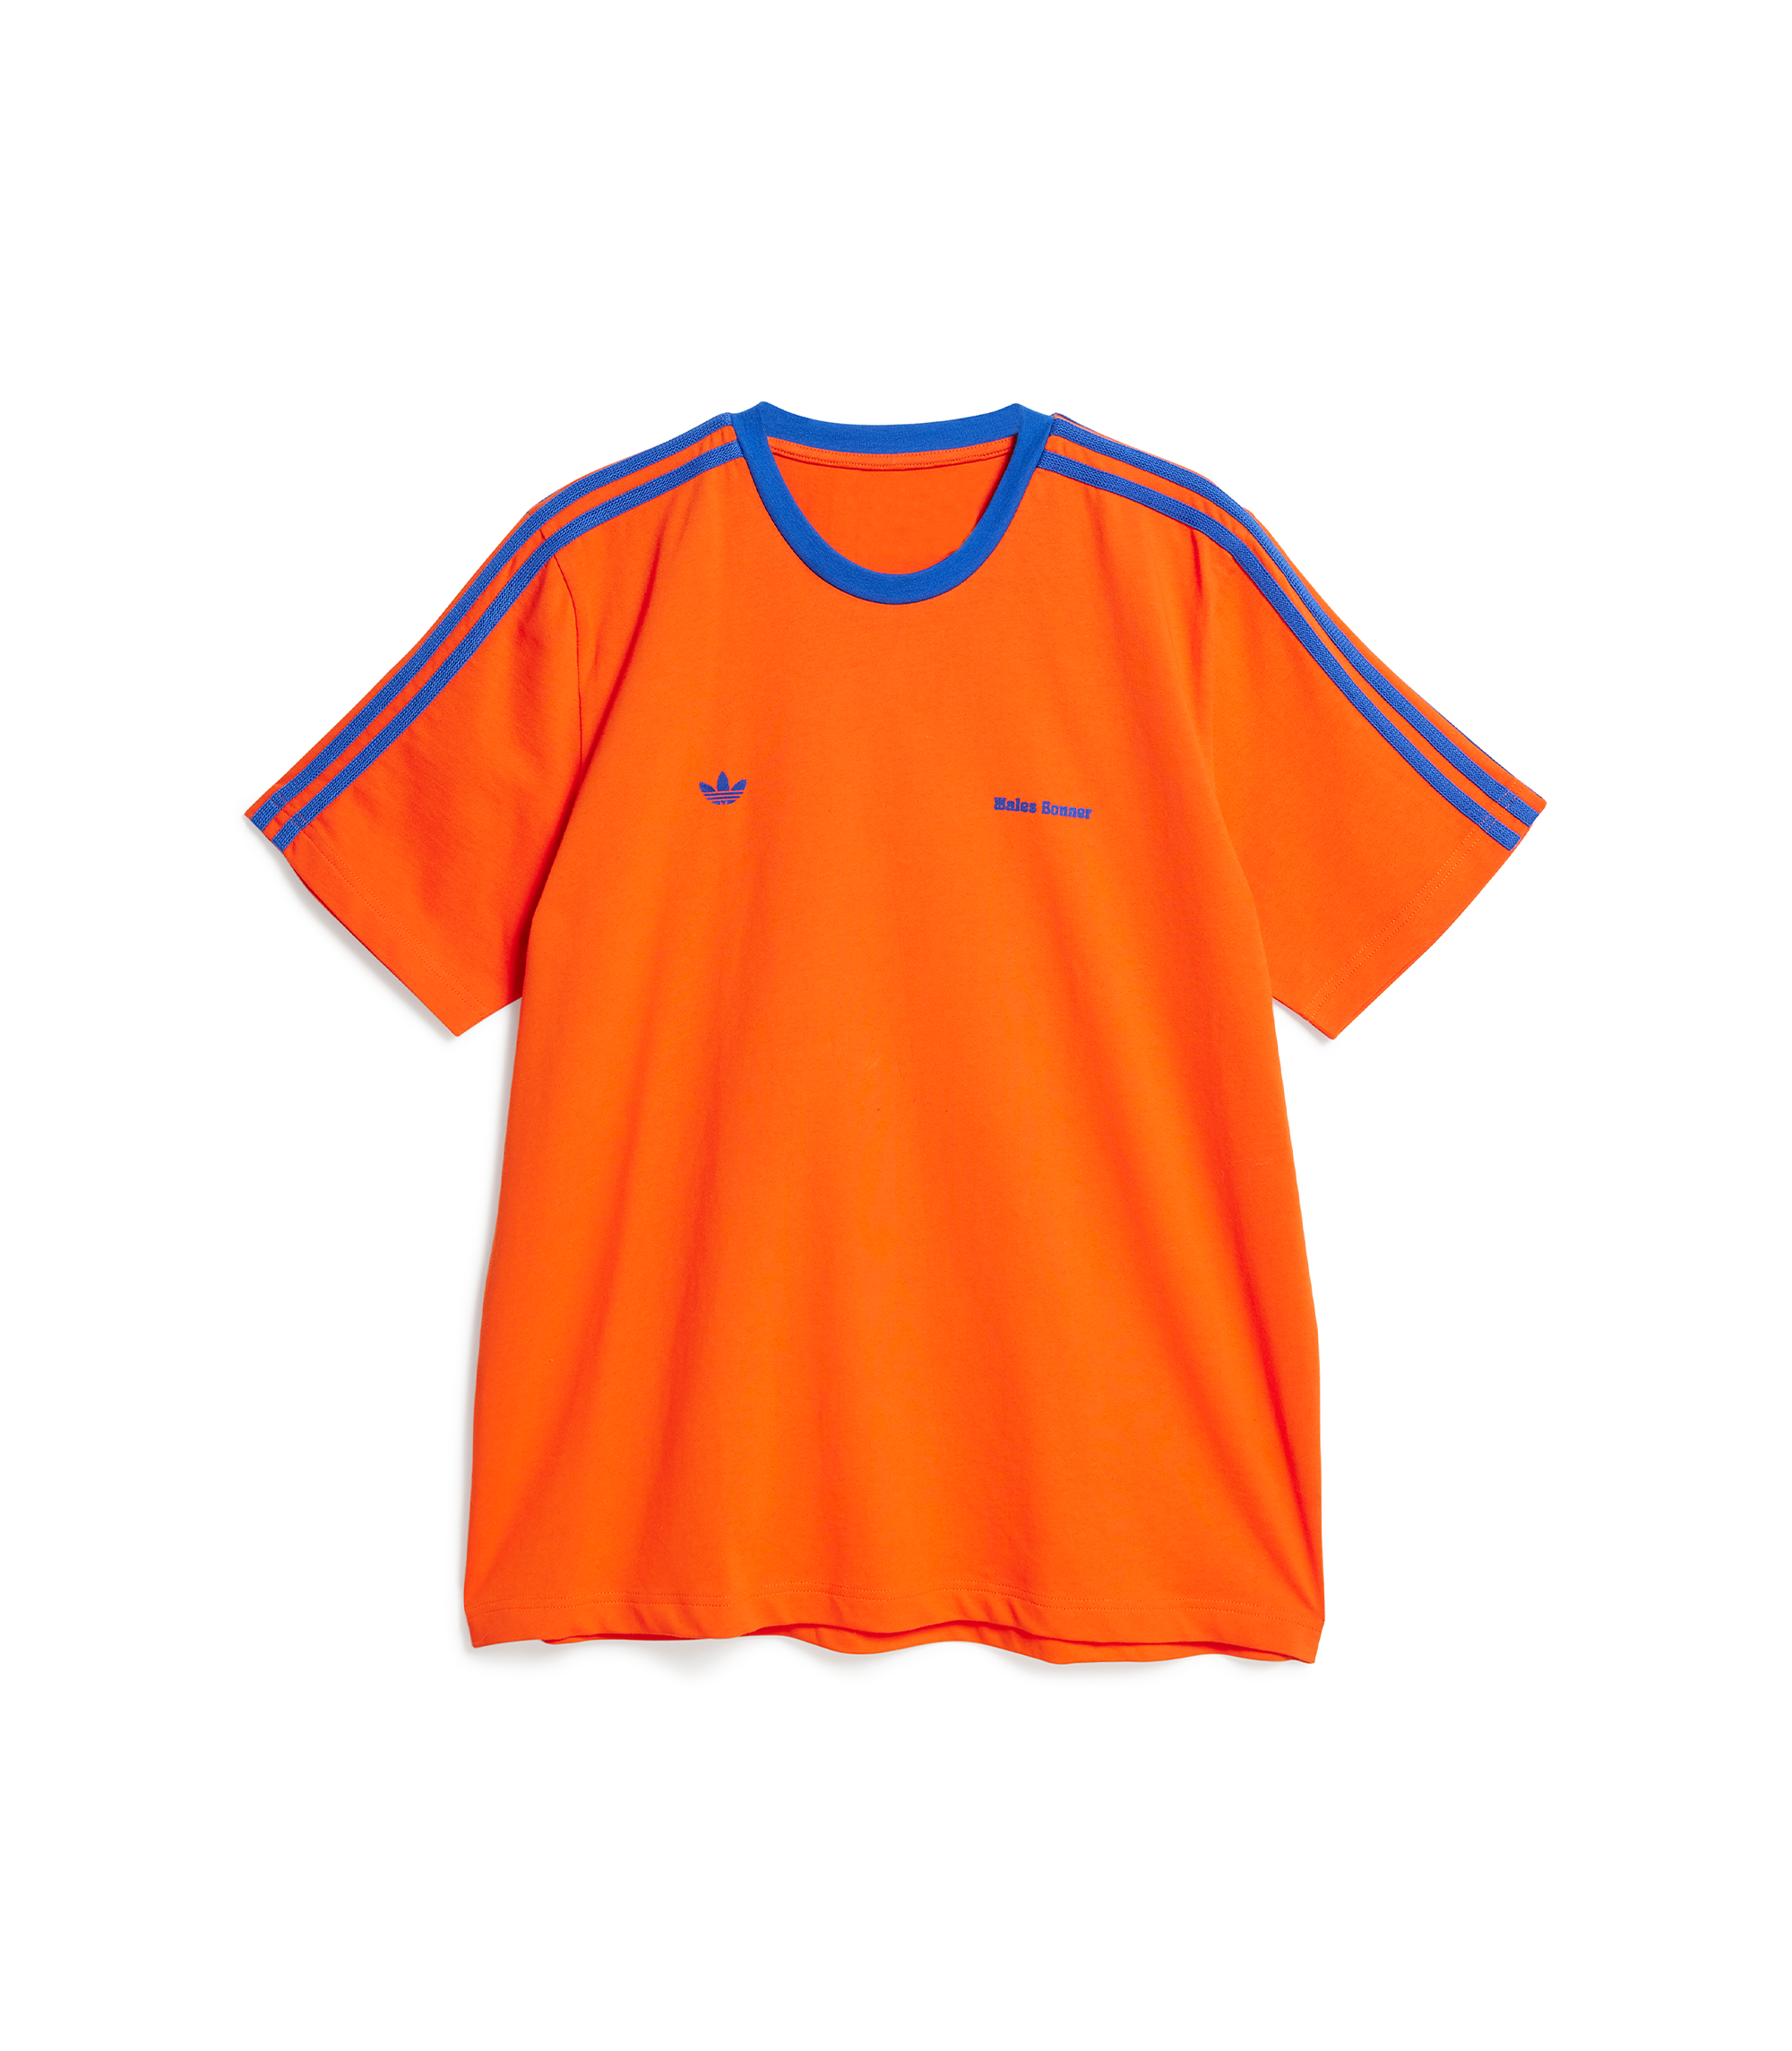 Wales Bonner Short Sleeve T-Shirt - Orange / Royal blue